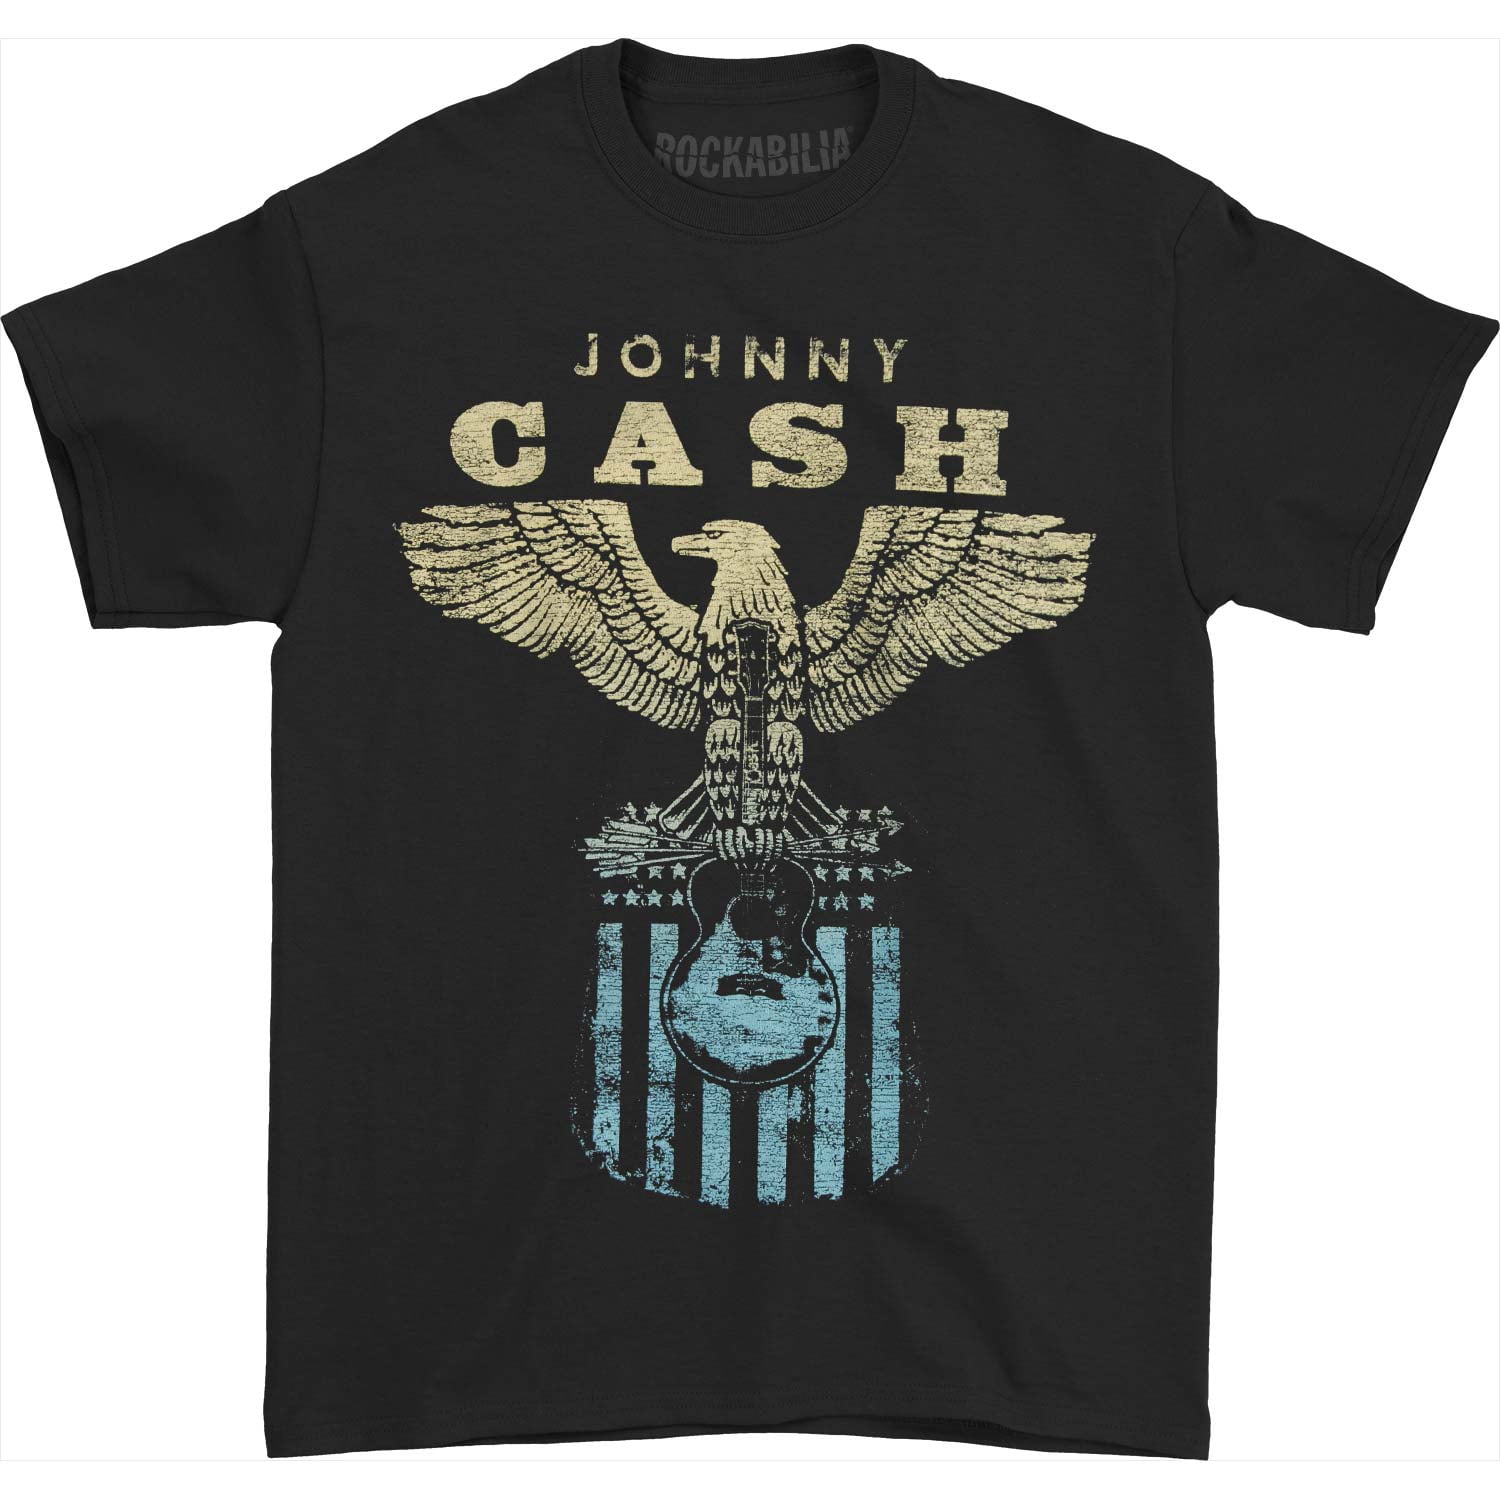 Johnny Cash - Johnny Cash Men's JC Eagle T-shirt Black - Walmart.com ...